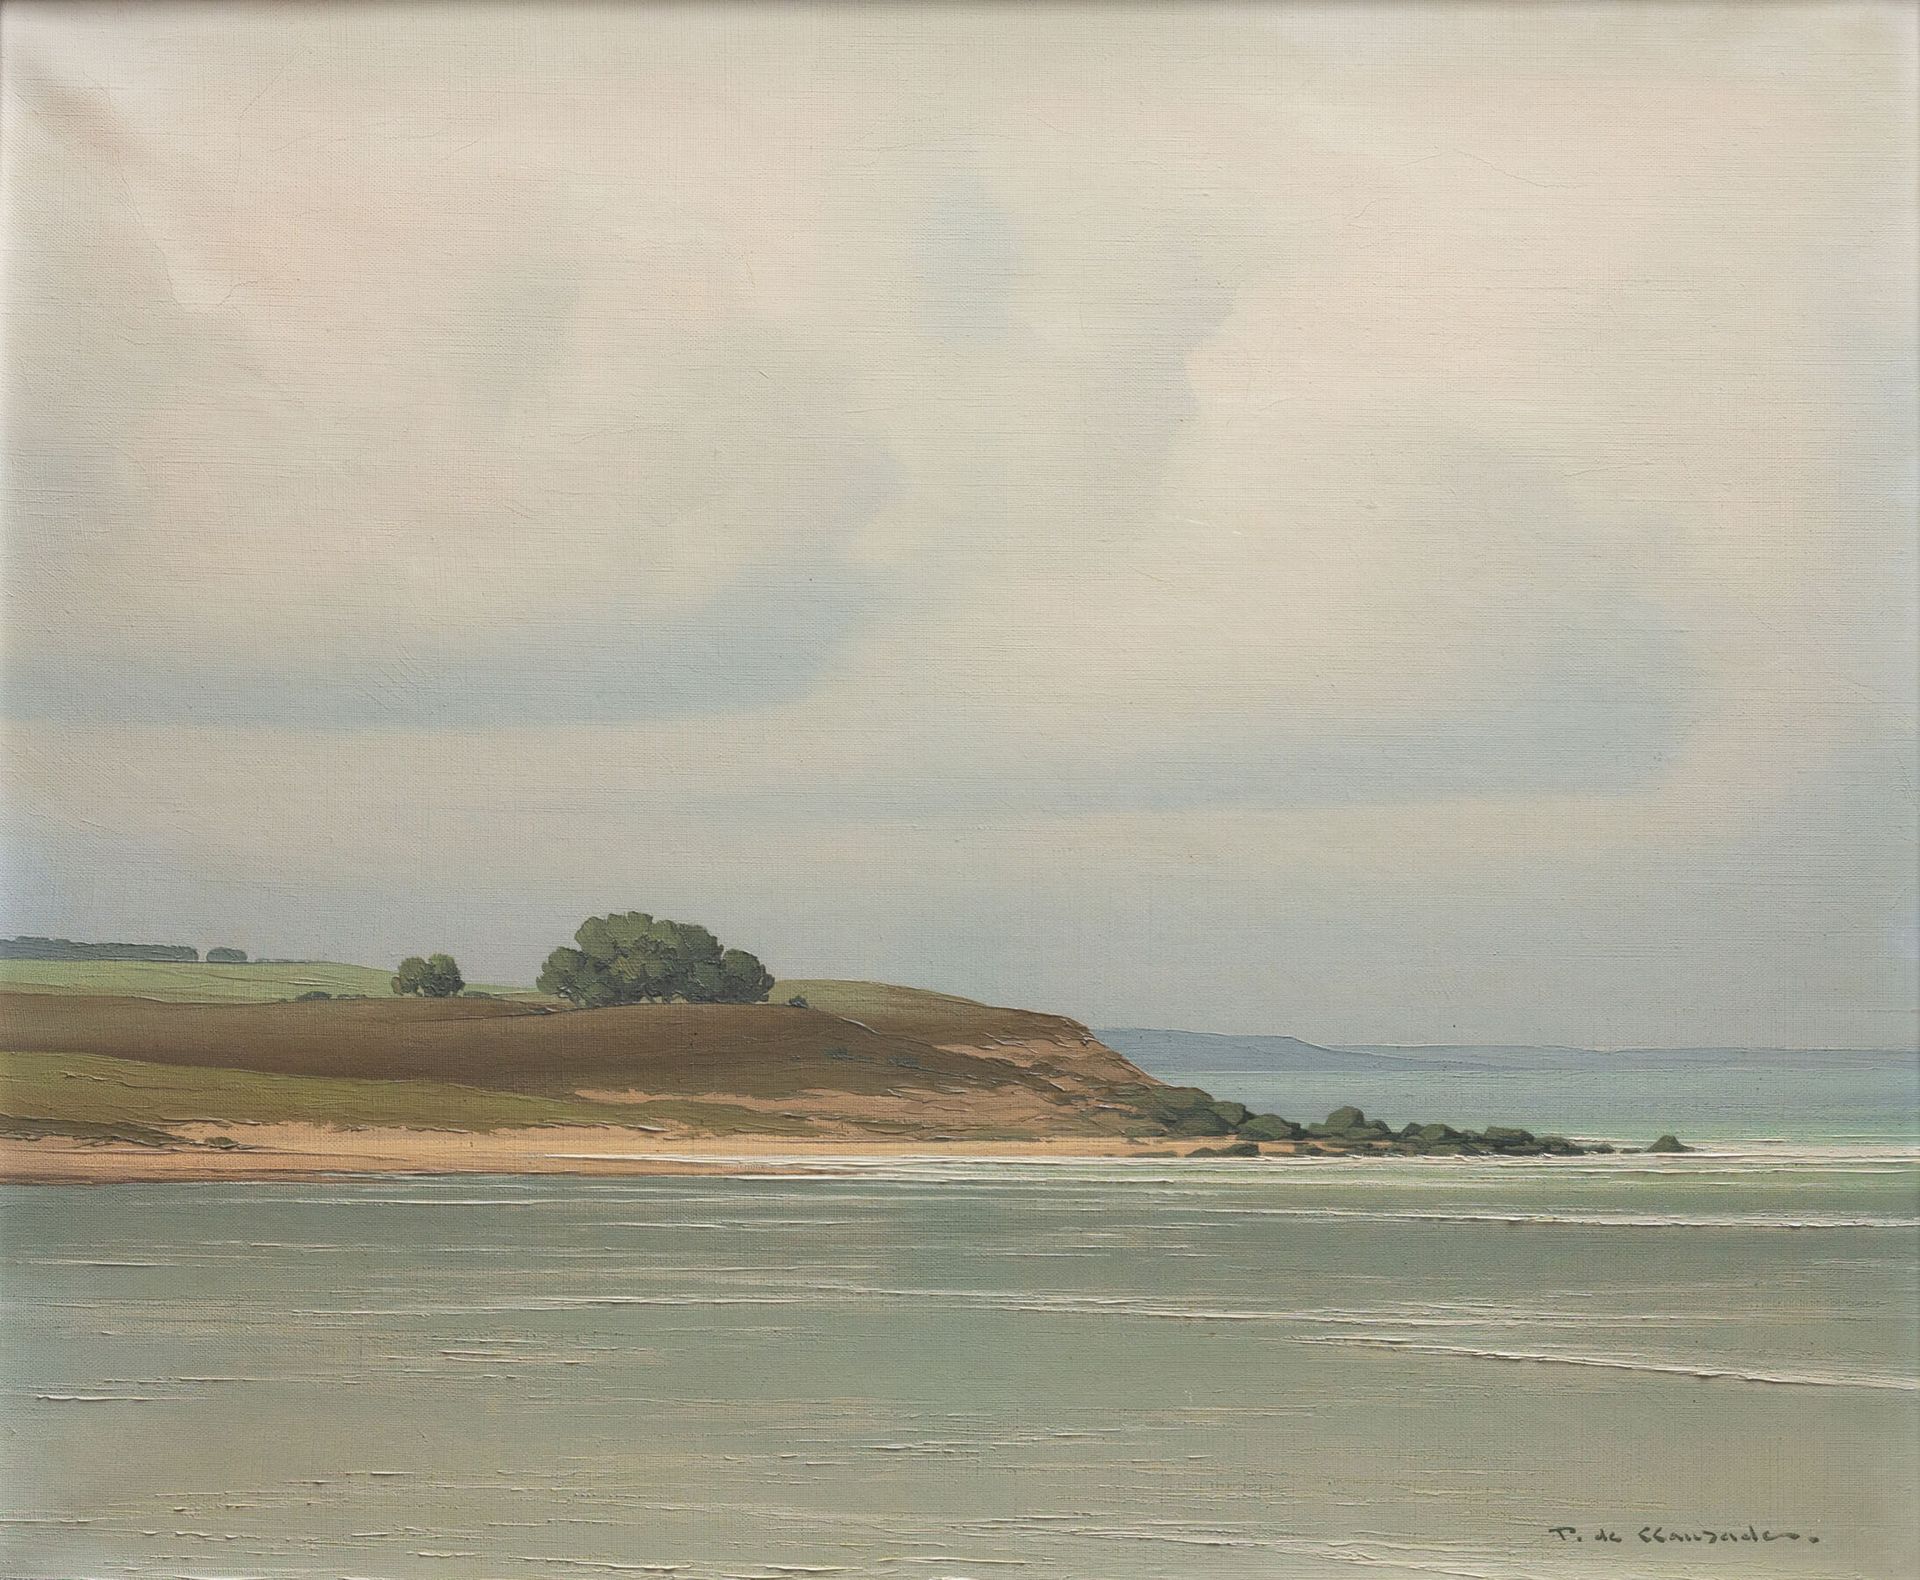 Null 皮埃尔-德-克劳萨德（1910-1976）。
阿卡洪。
布面油画，右下方有签名。
高_54厘米，宽_65厘米
装在一个有铜锈的木雕框架里（缺失）。